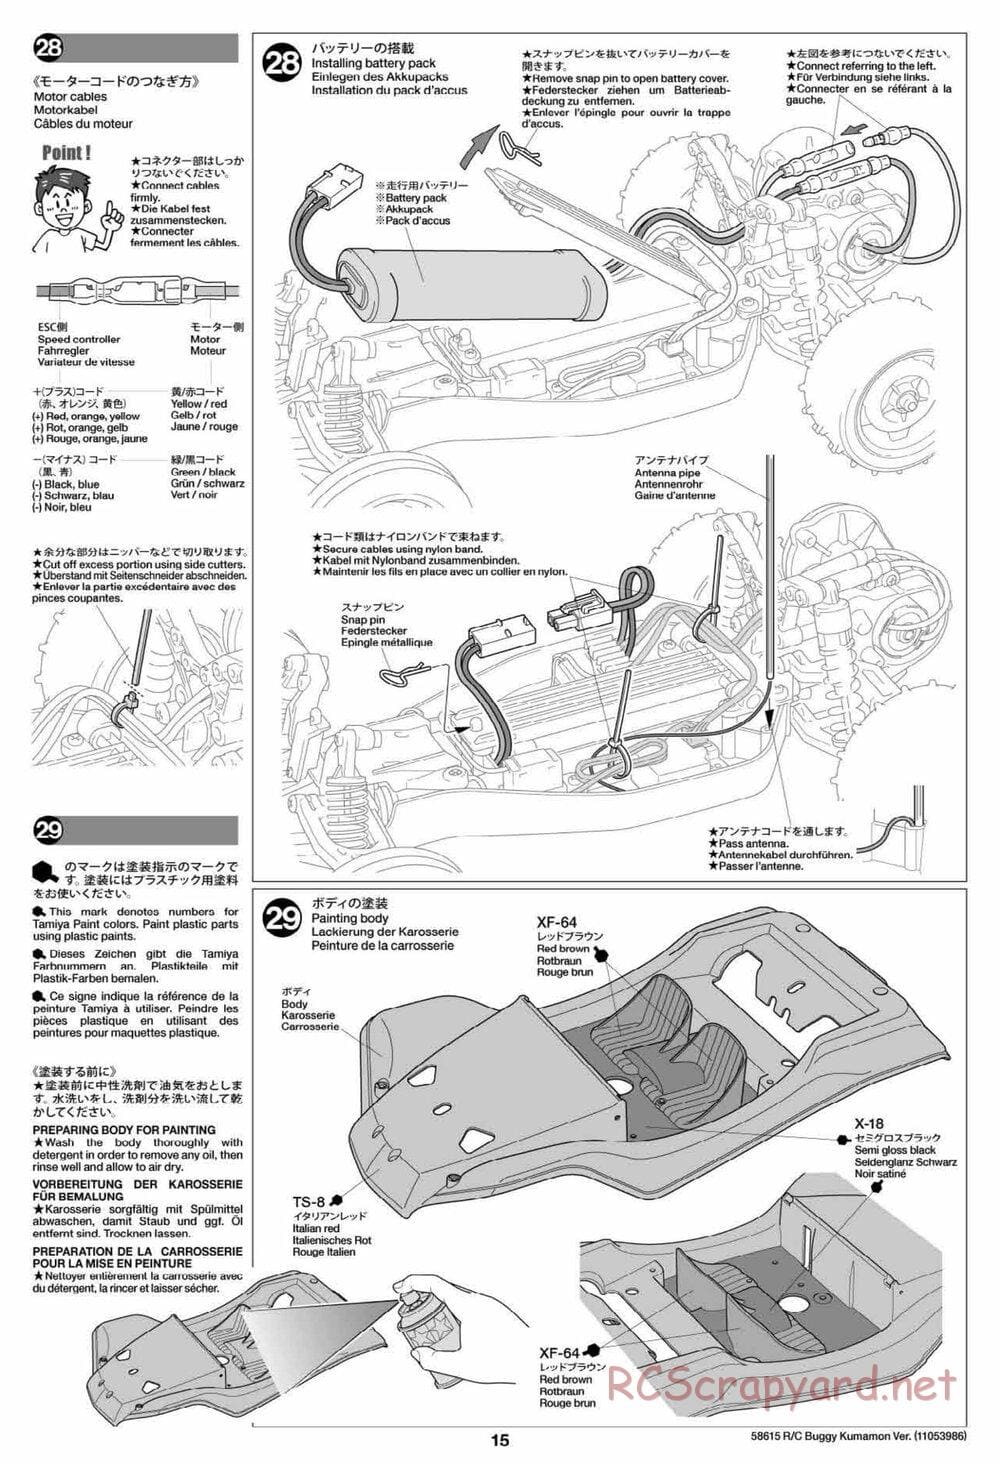 Tamiya - Buggy Kumamon Version Chassis - Manual - Page 15